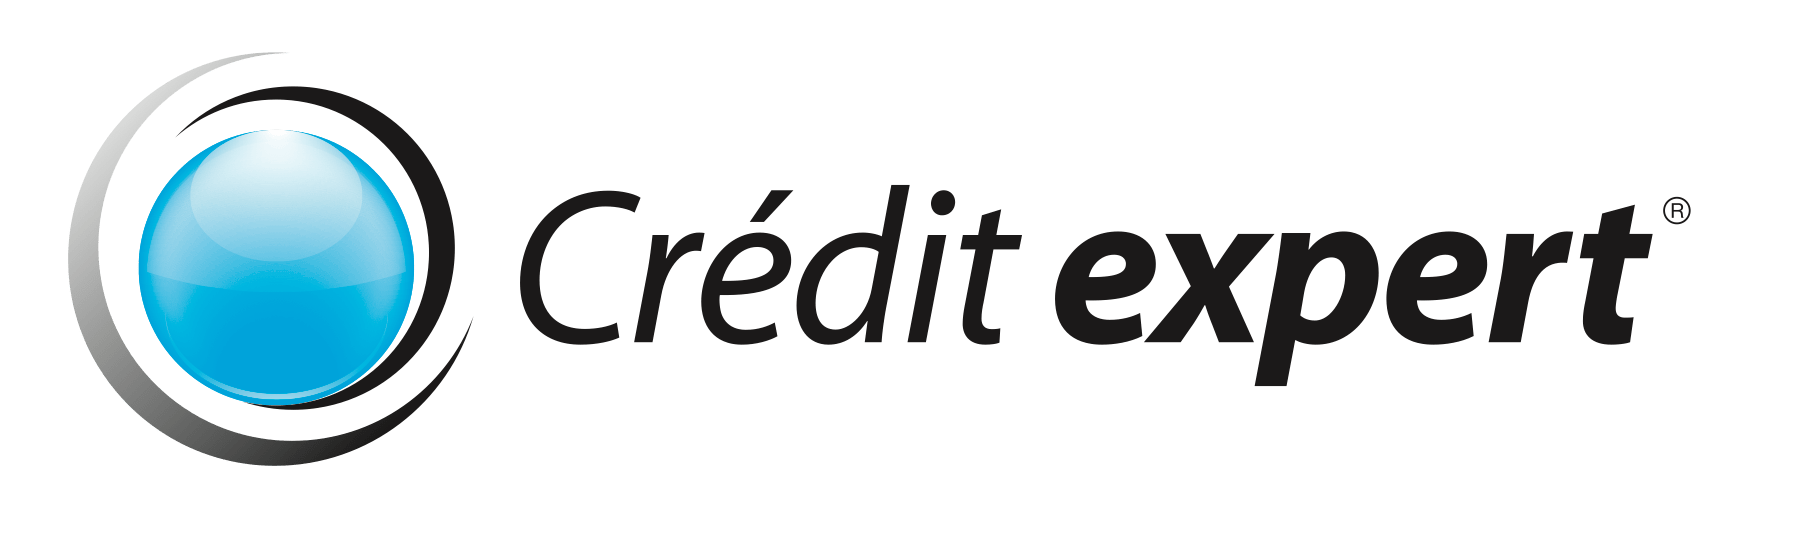 Credit Expert